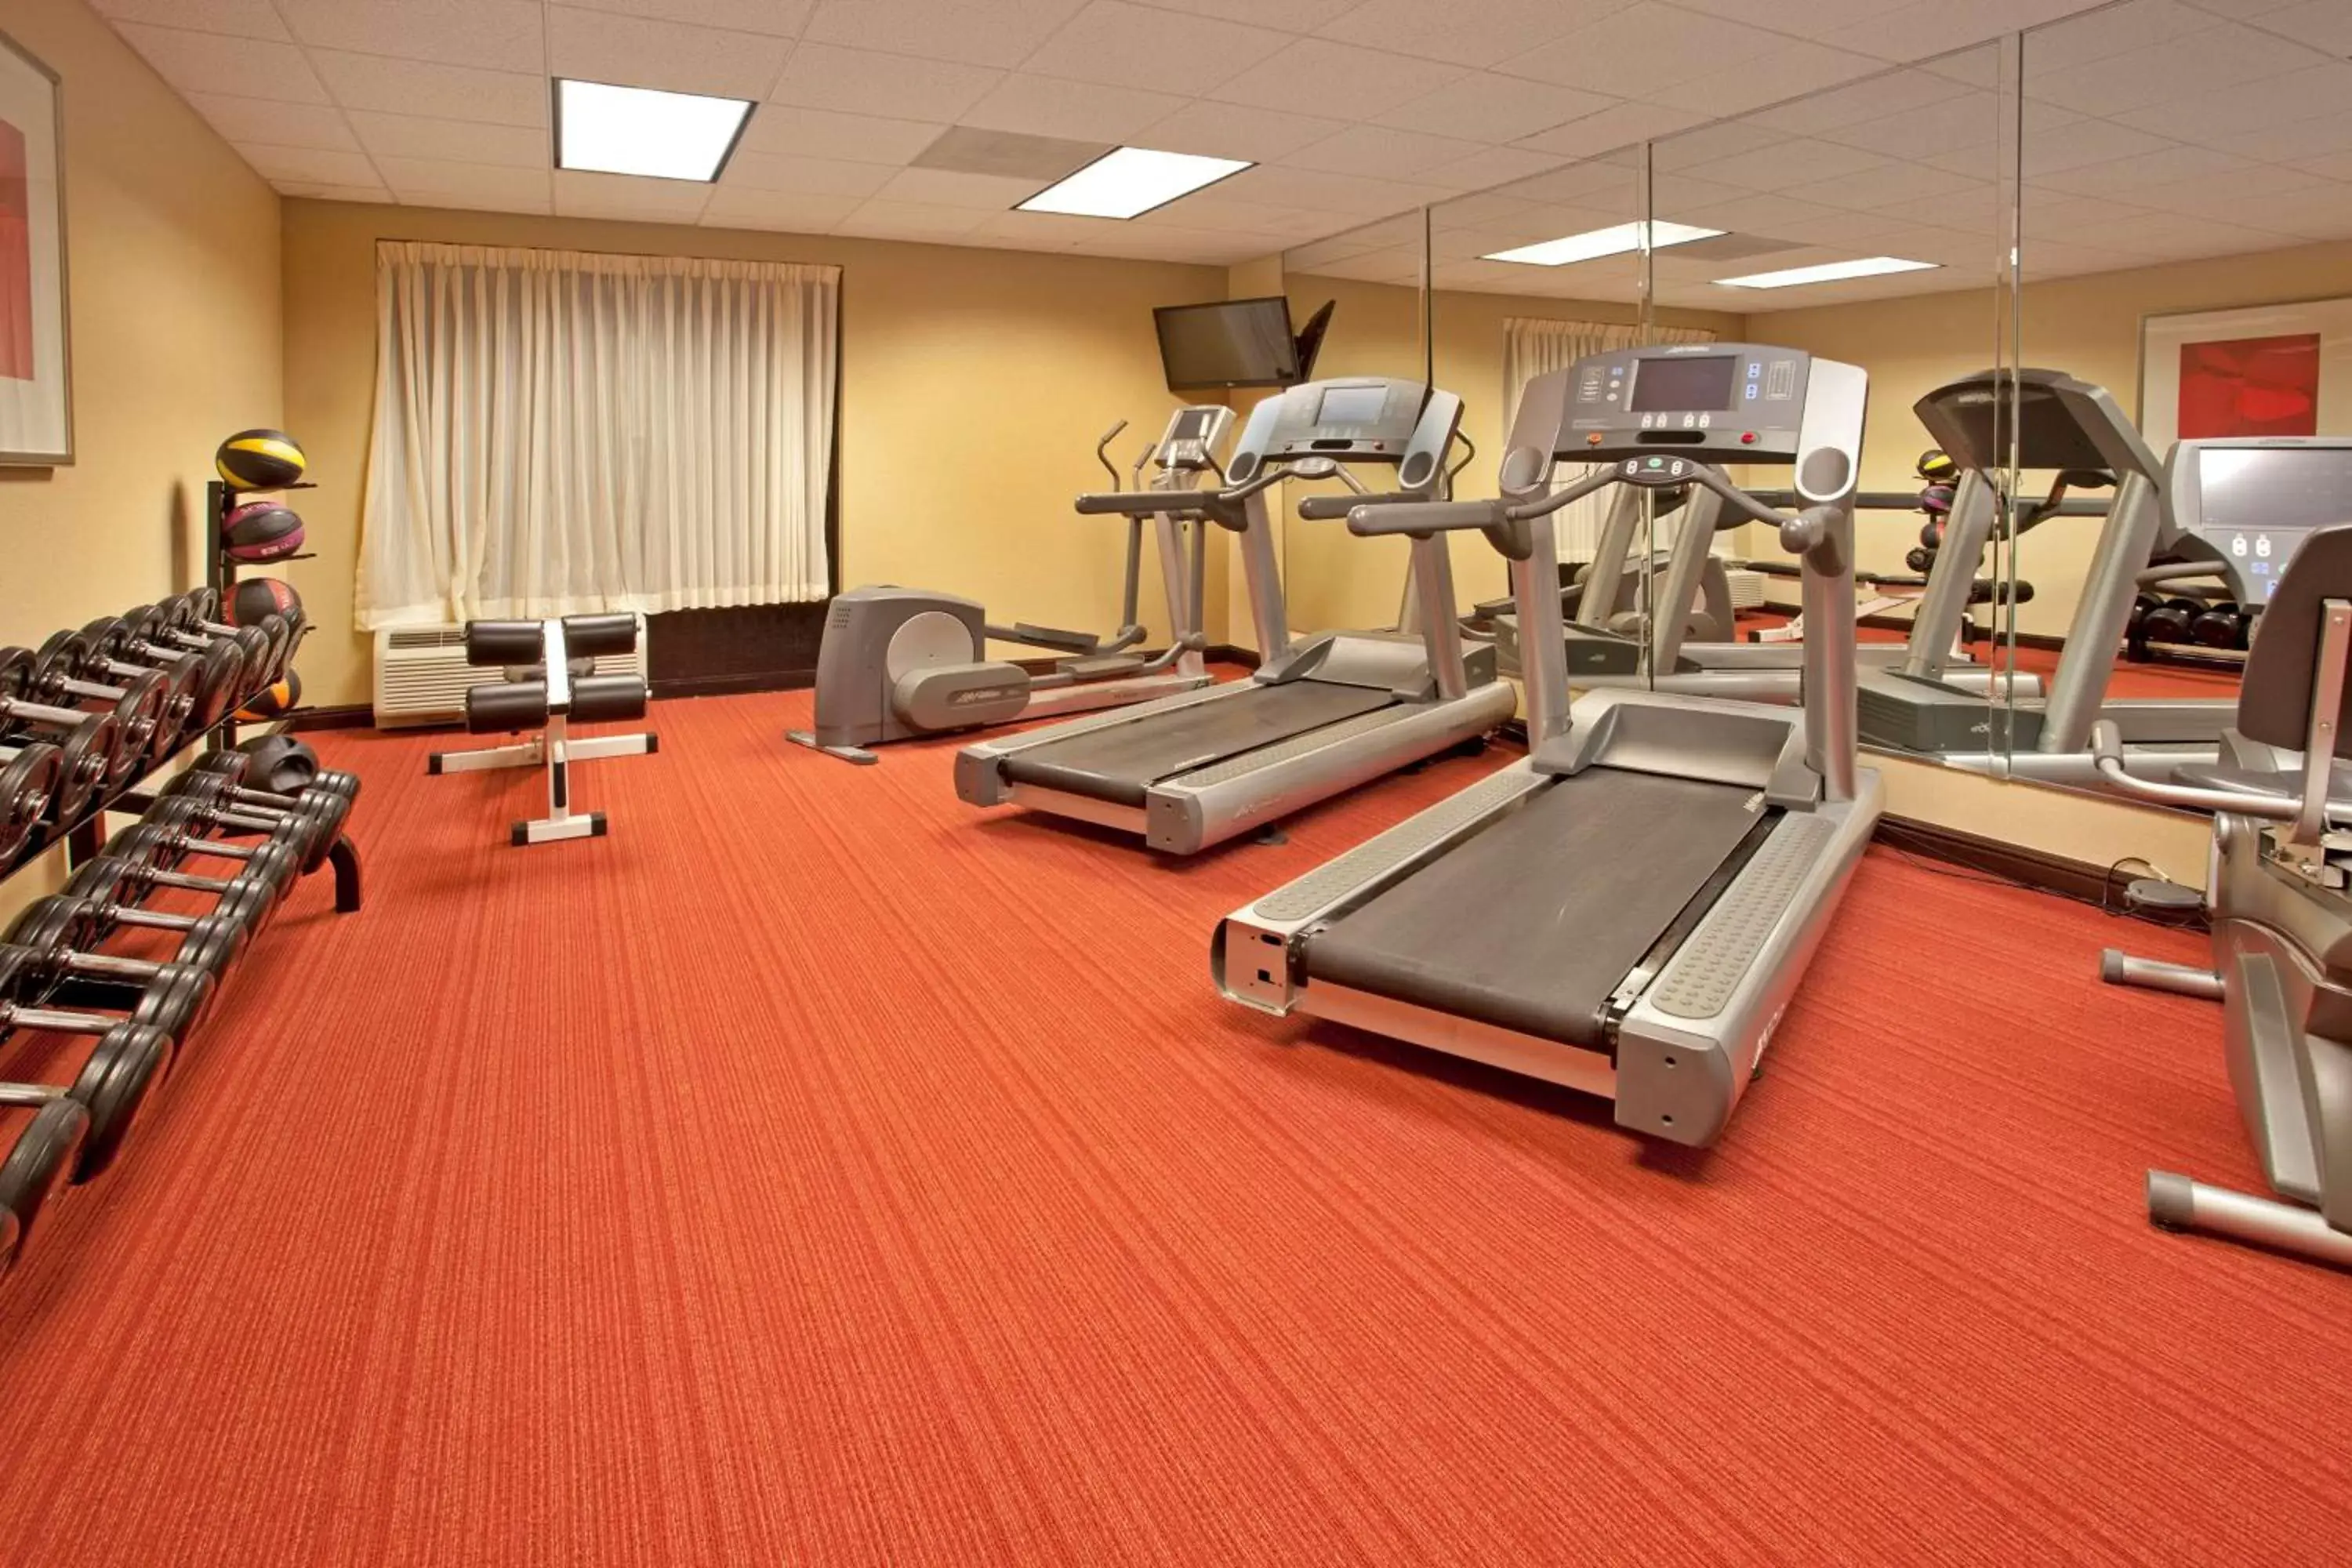 Fitness centre/facilities, Fitness Center/Facilities in Hyatt Place Atlanta Airport North